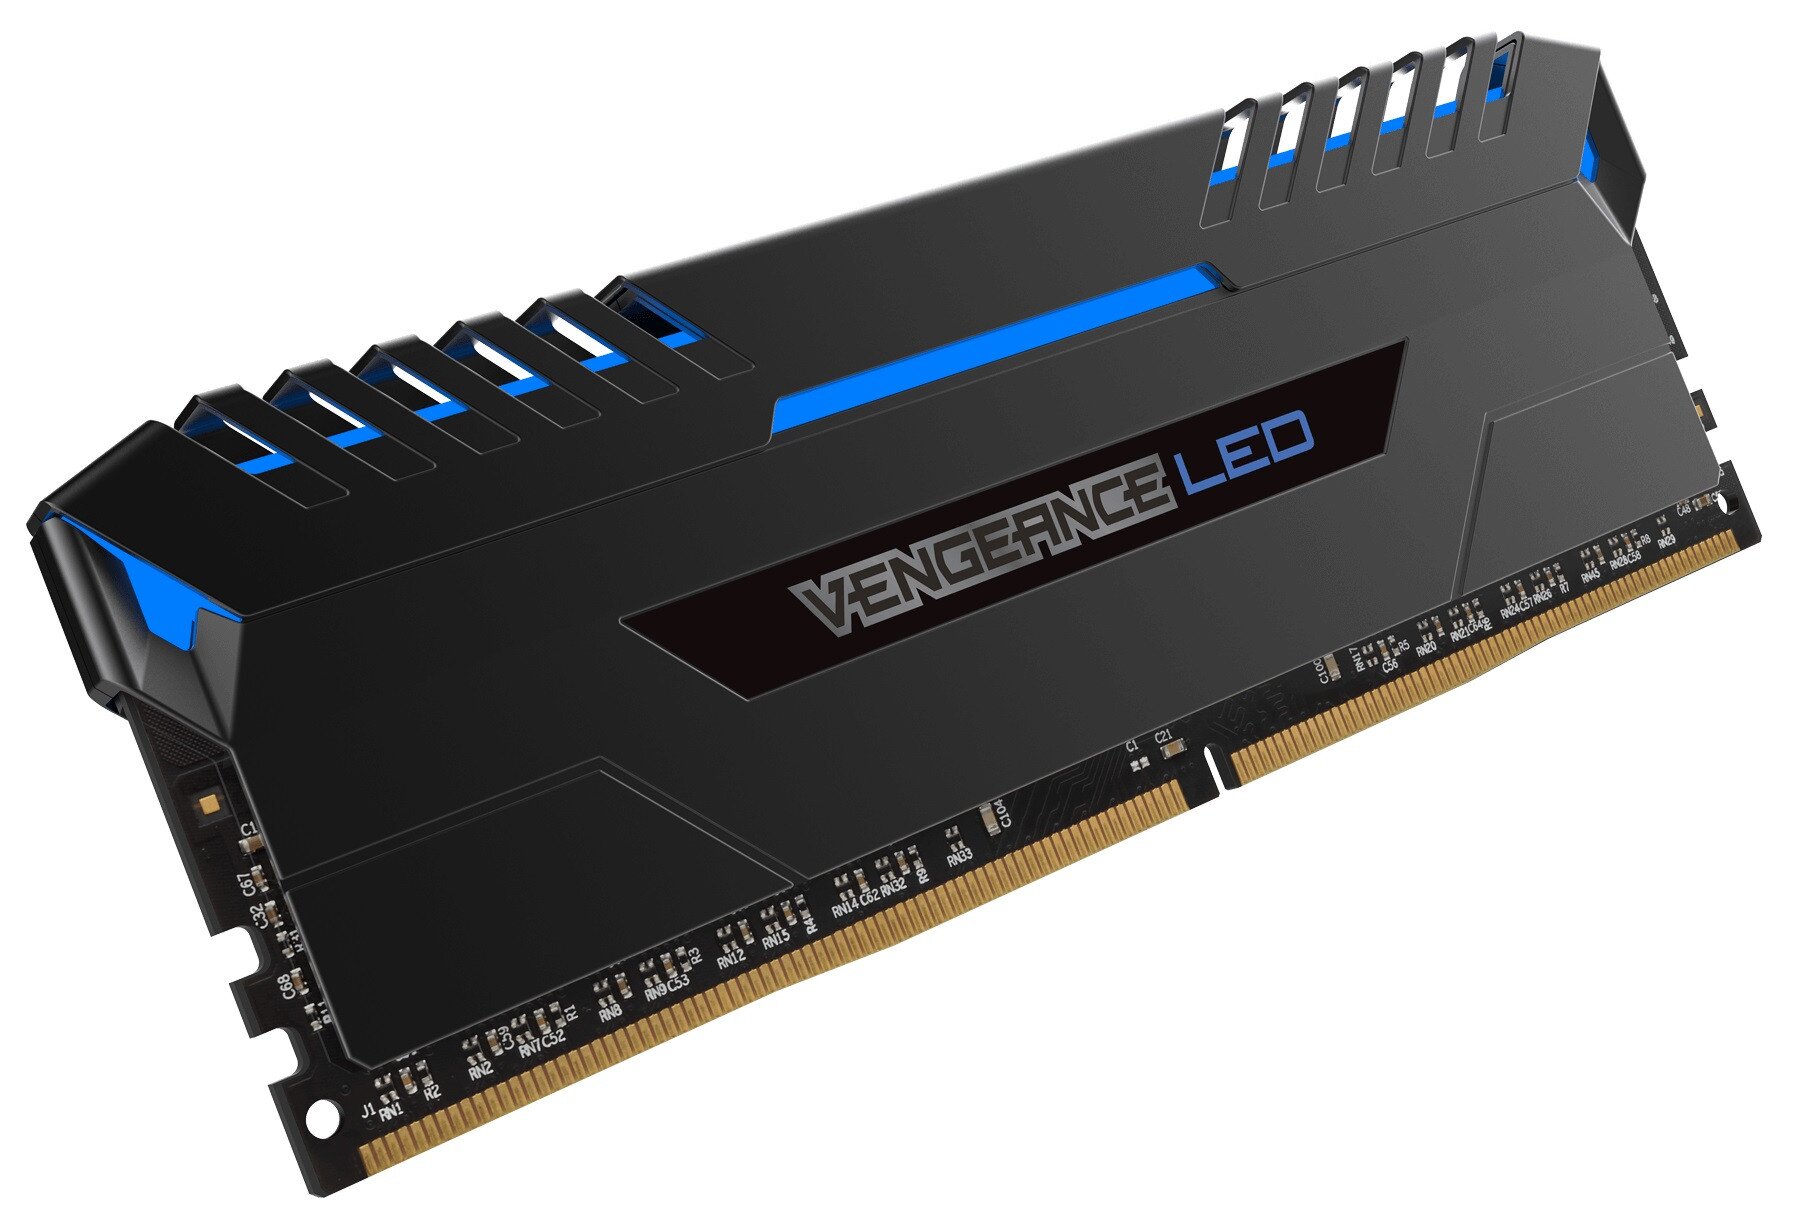 Corsair Vengeance LED - 16GB (2 x 8GB) DDR4 DRAM - 2666MHz C16 Memory Kit -  Blue LED